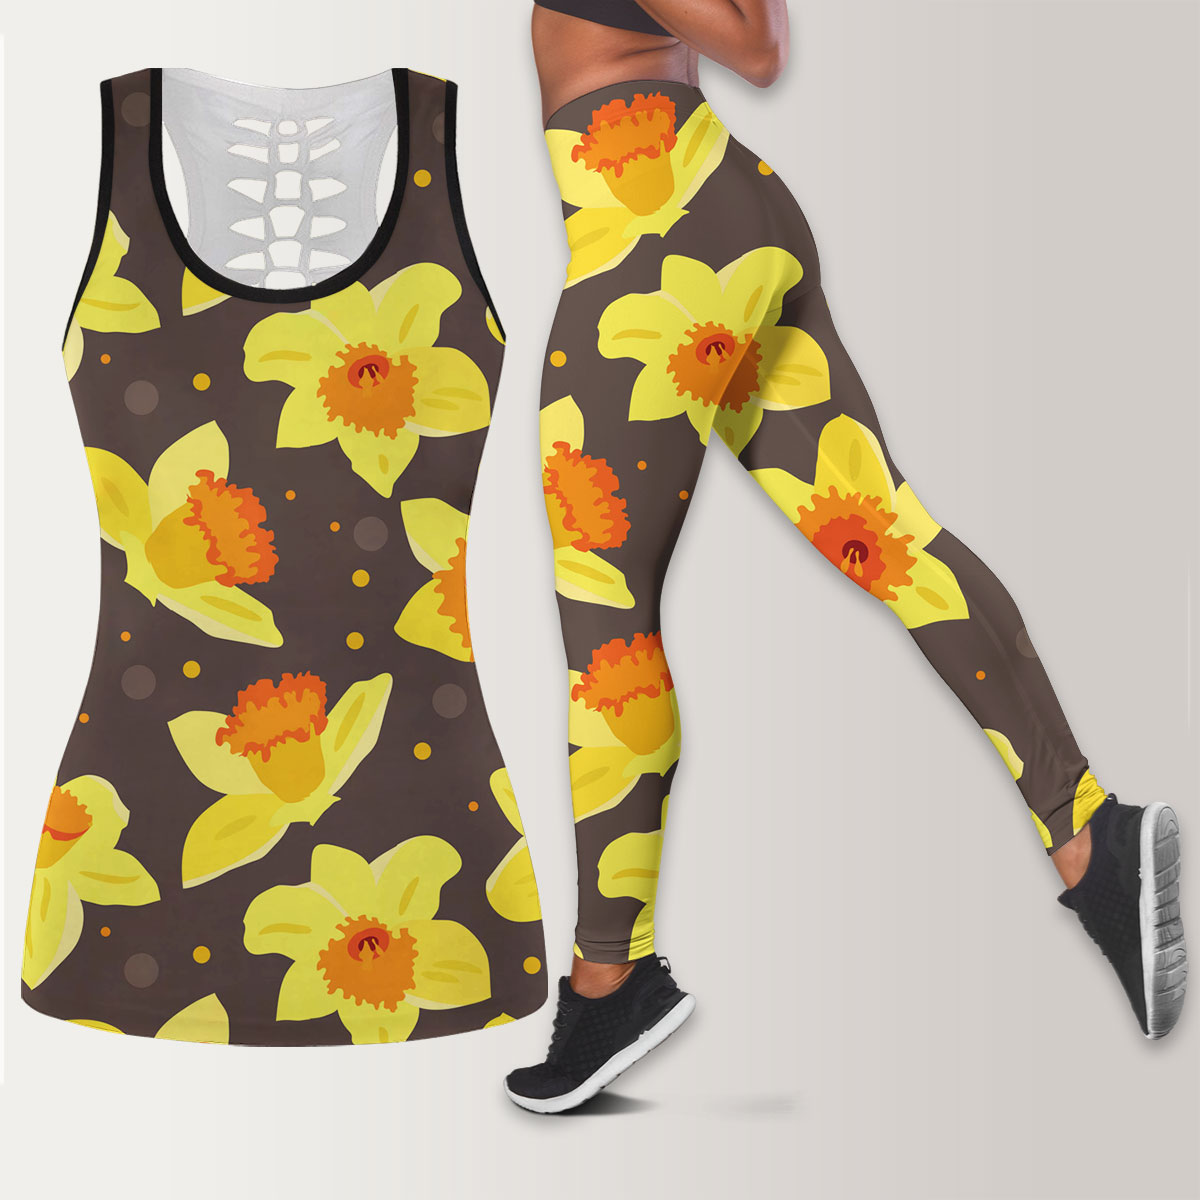 Yellow Daffodils On Brown Background Legging Tank Top set